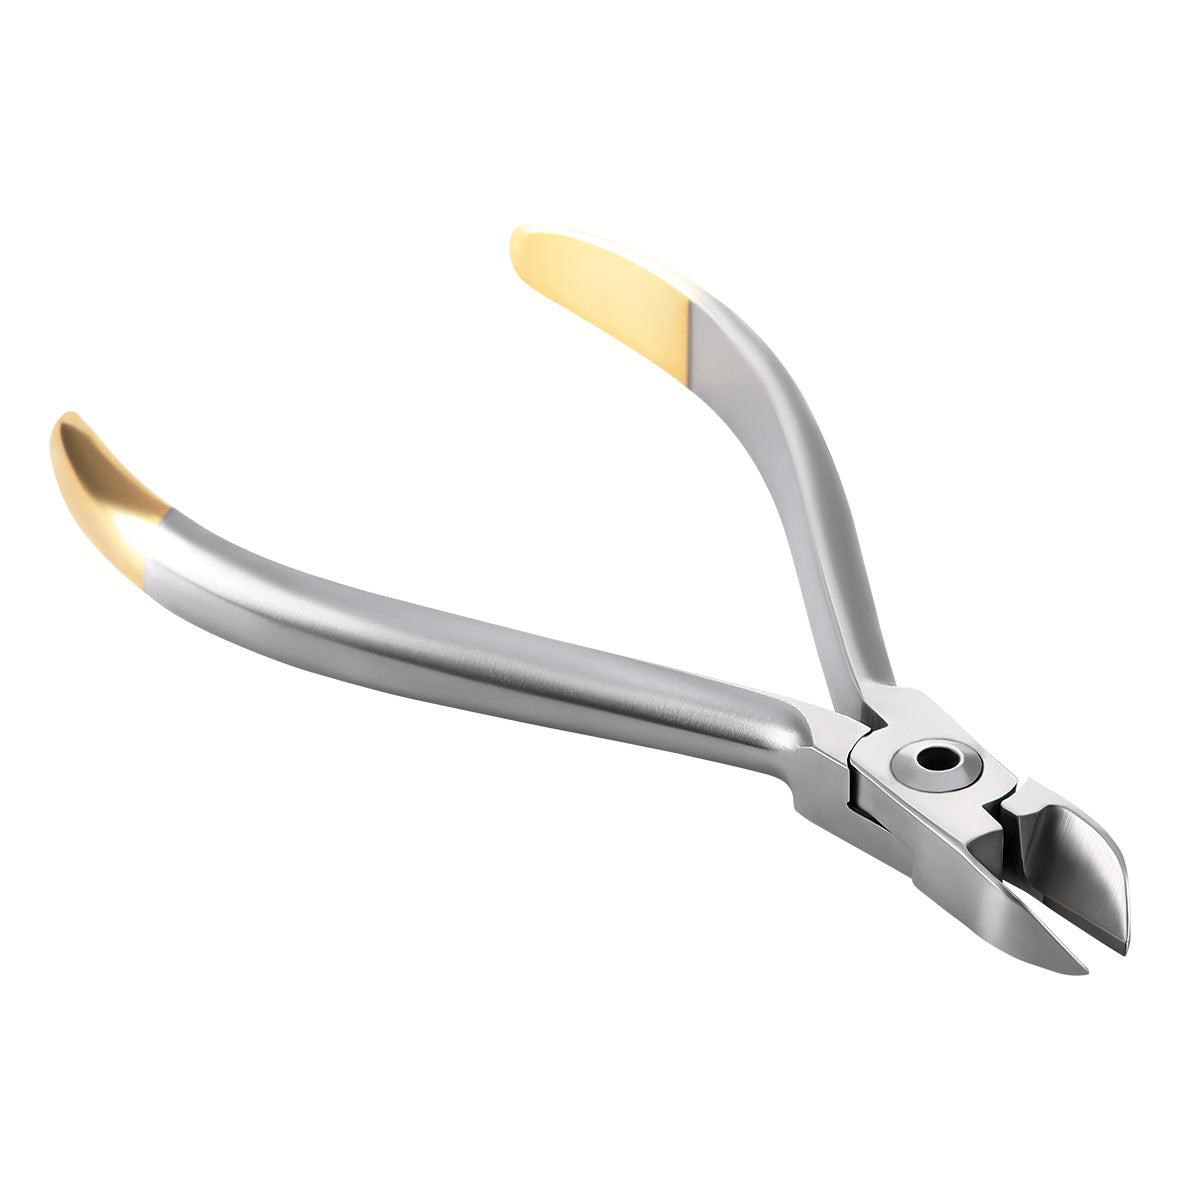 Dental Orthodontic Light Wire Cutter Plier - azdentall.com